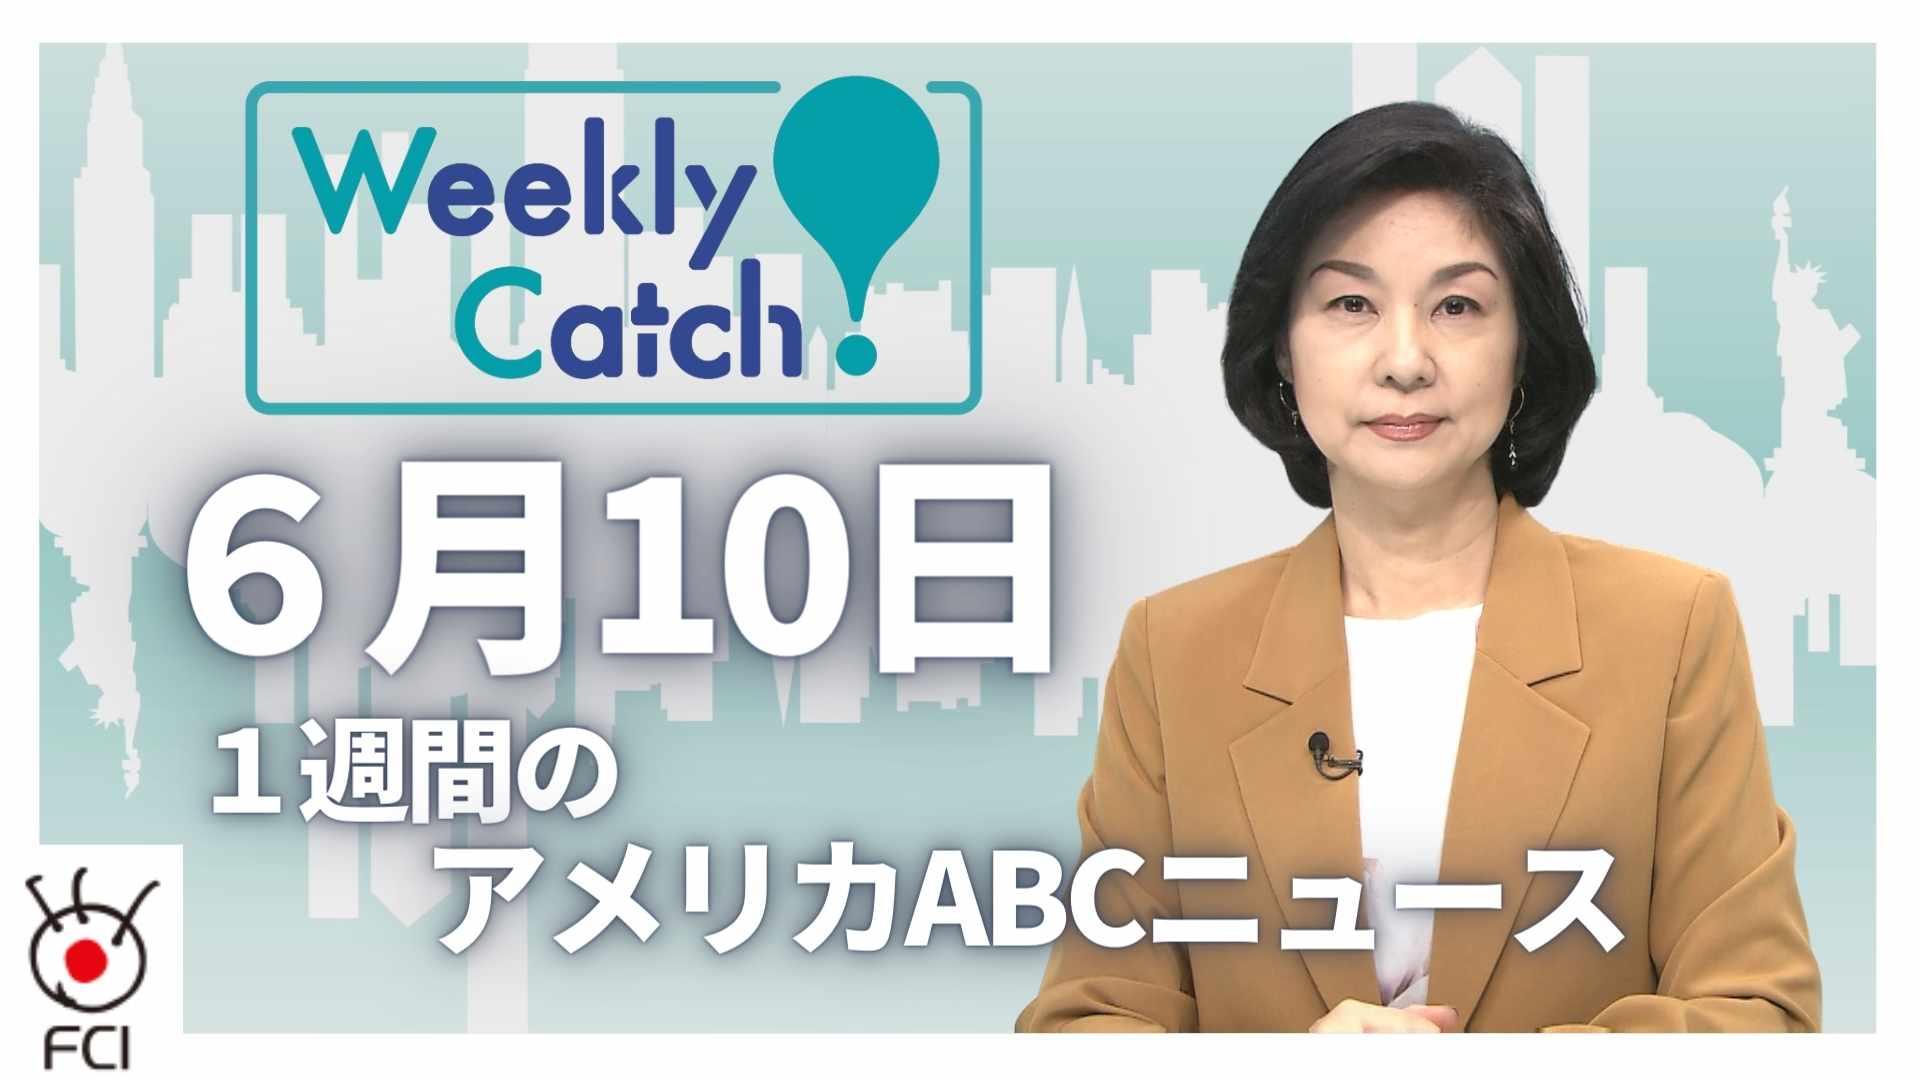 6月10 日 Weekly Catch!